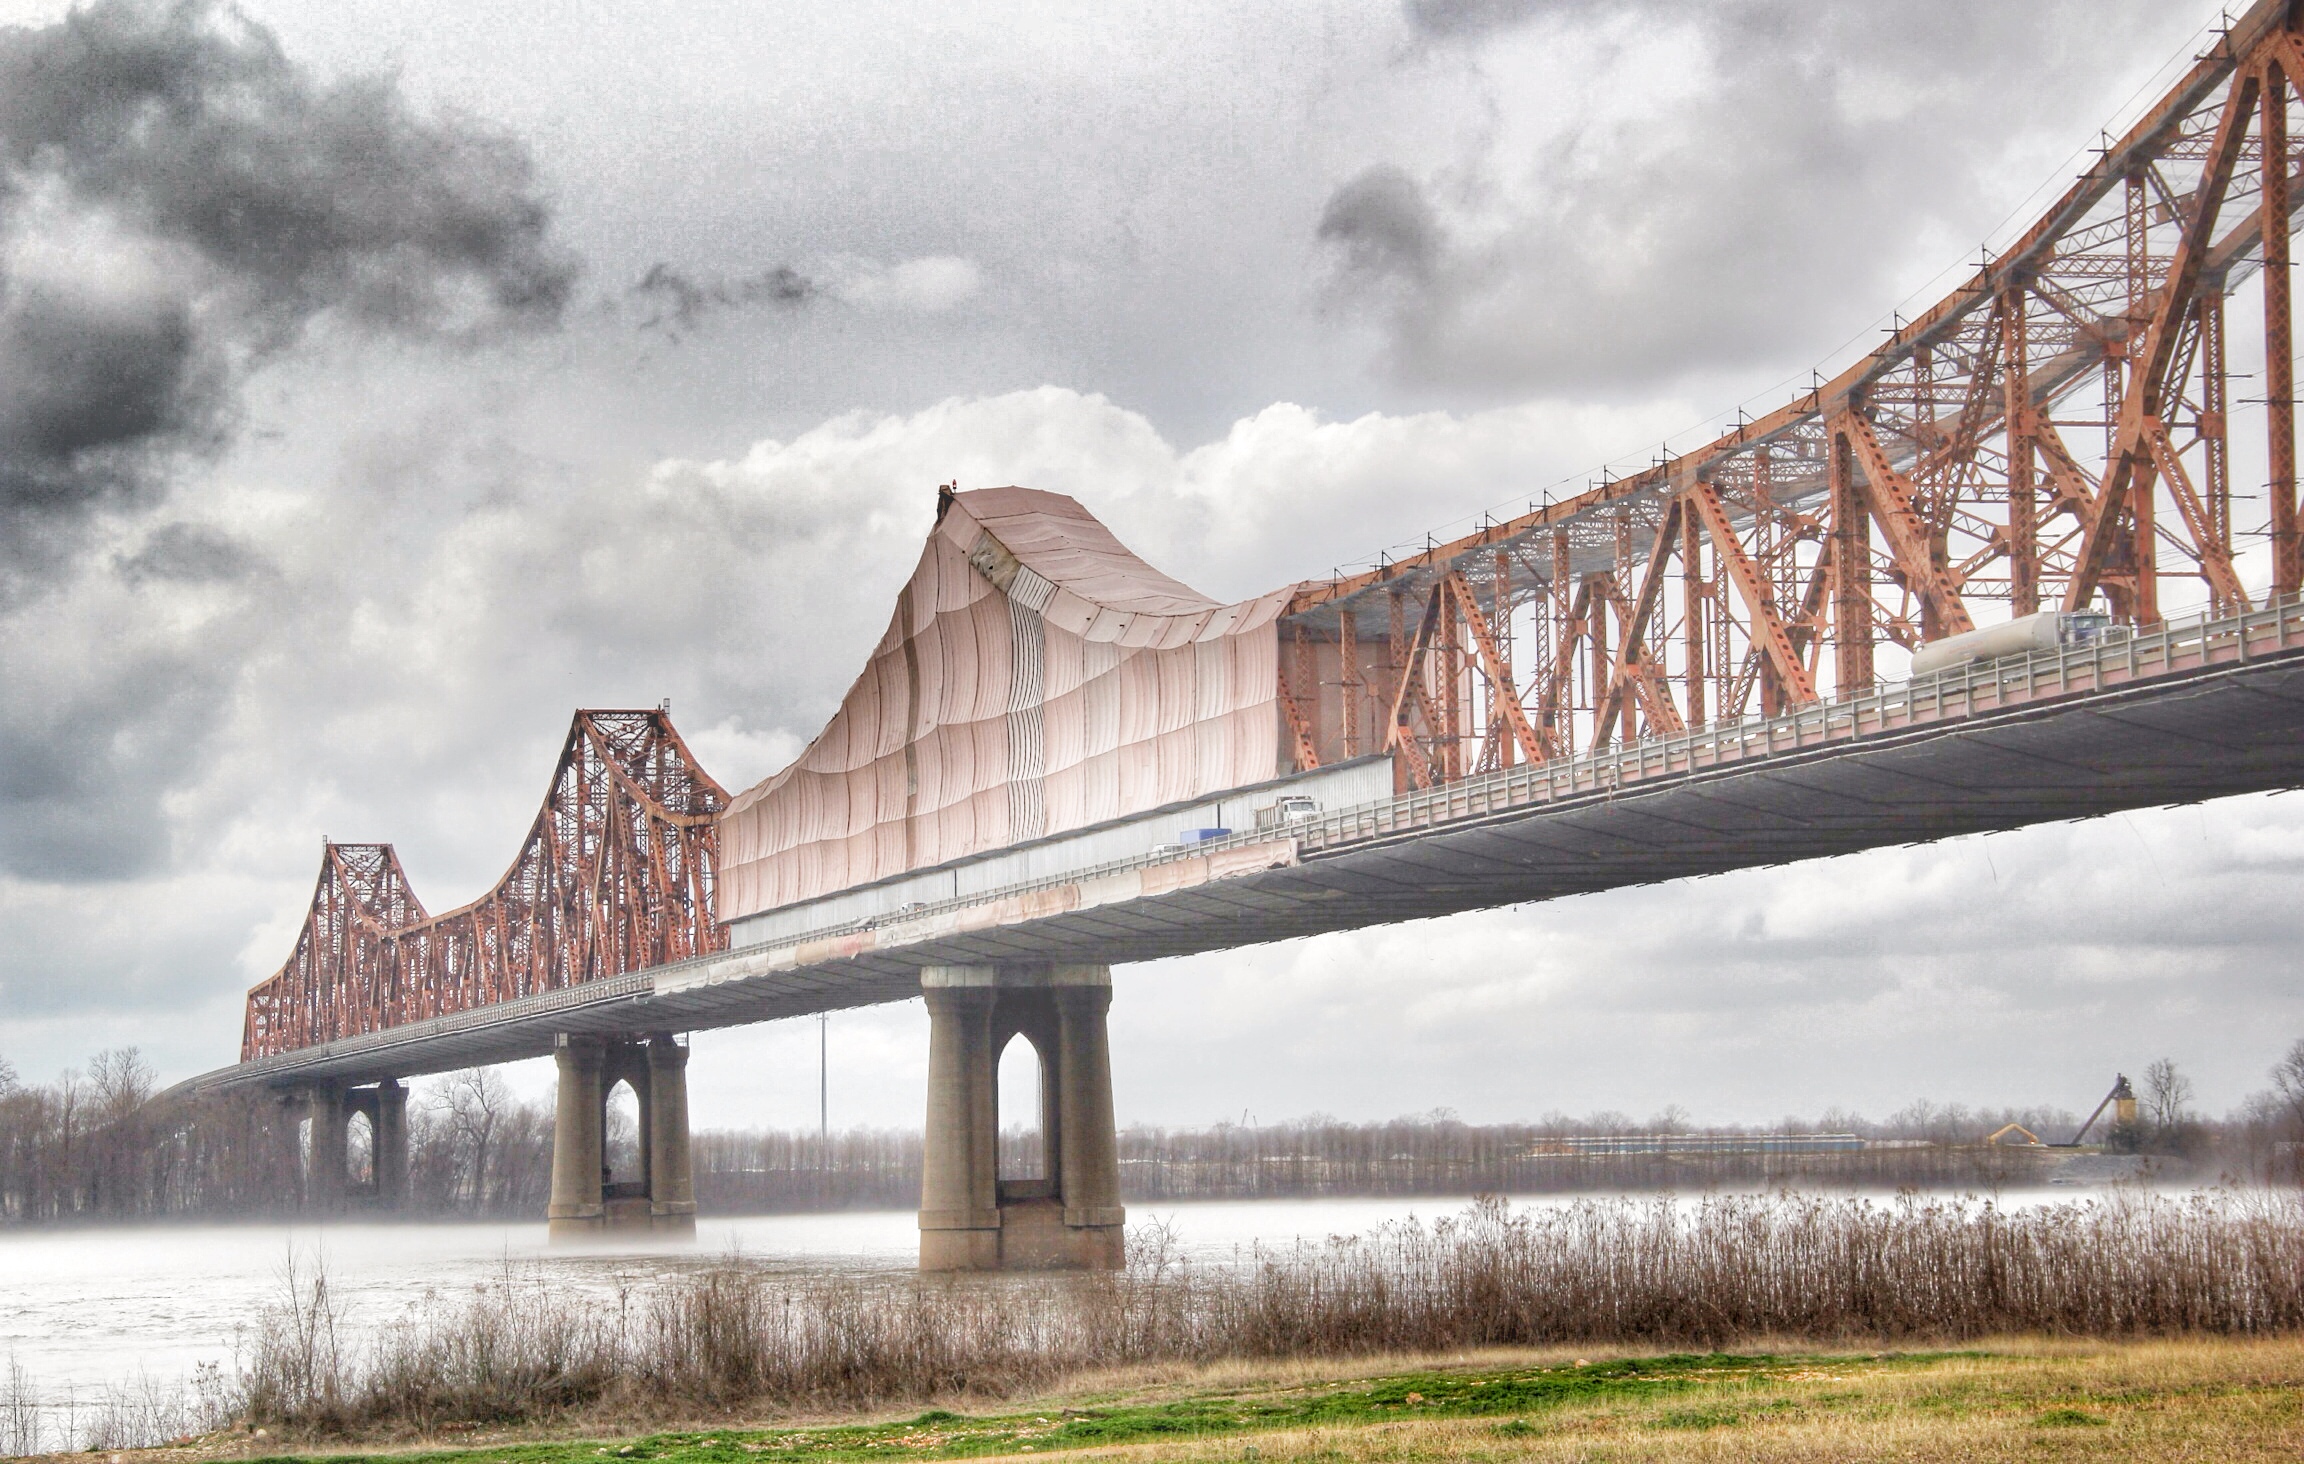 Red/orange Huey P Long bridge in Jefferson Parish with vehicles, trucks, and workers